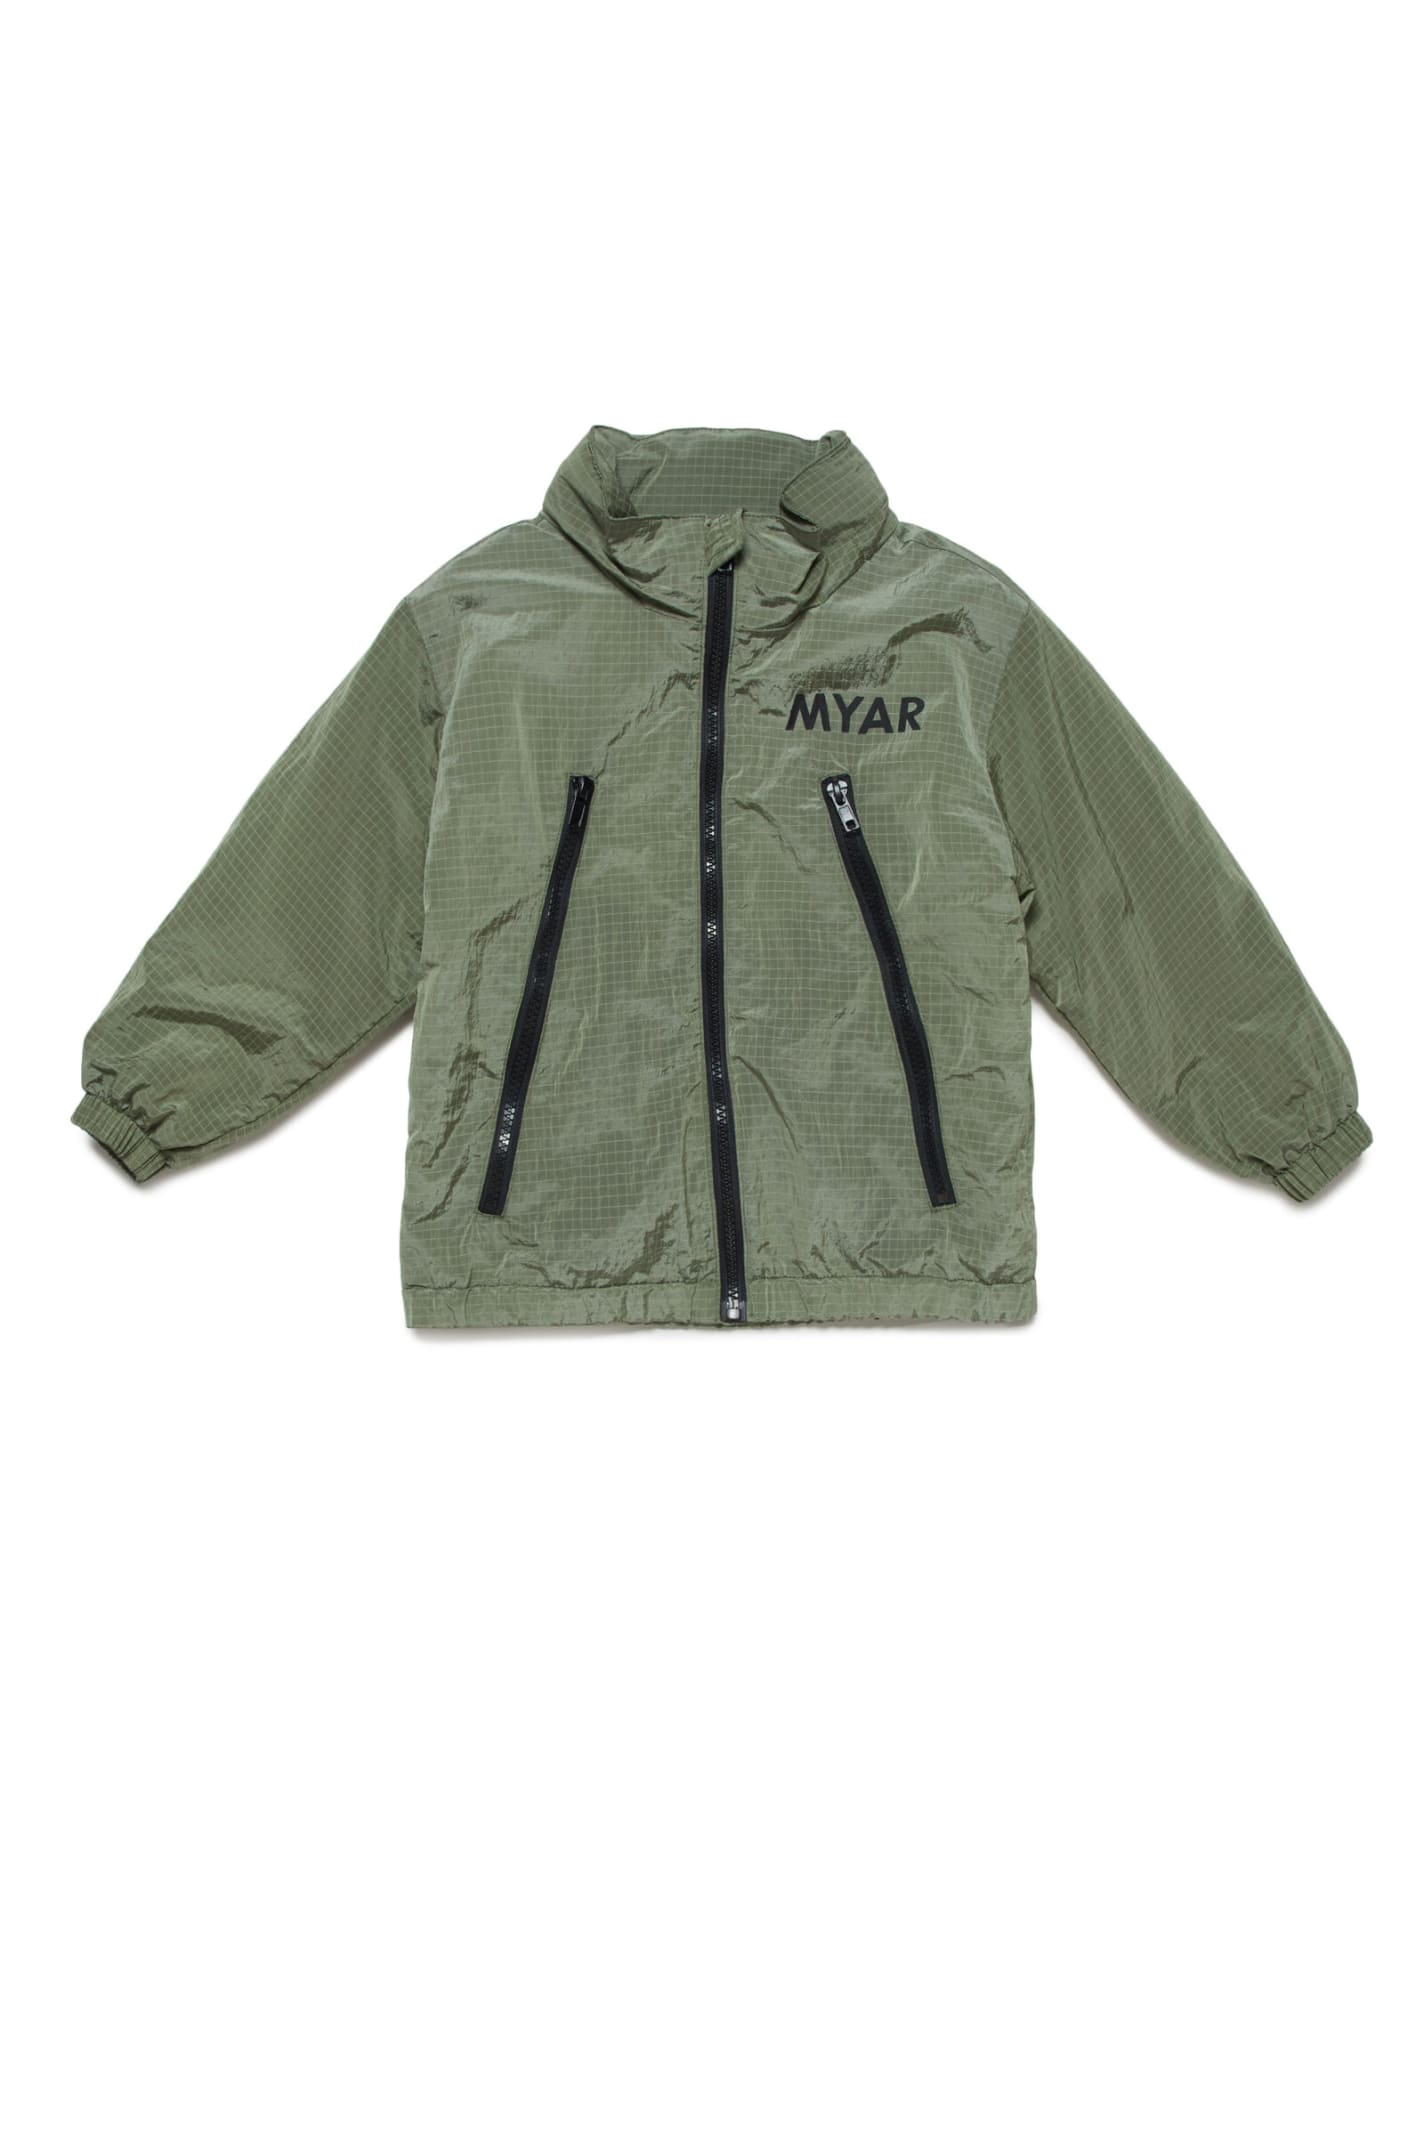 MYAR Myj15u Jacket Myar Deadstock Green Ripstop Fabric Jacket With Concealed Hood